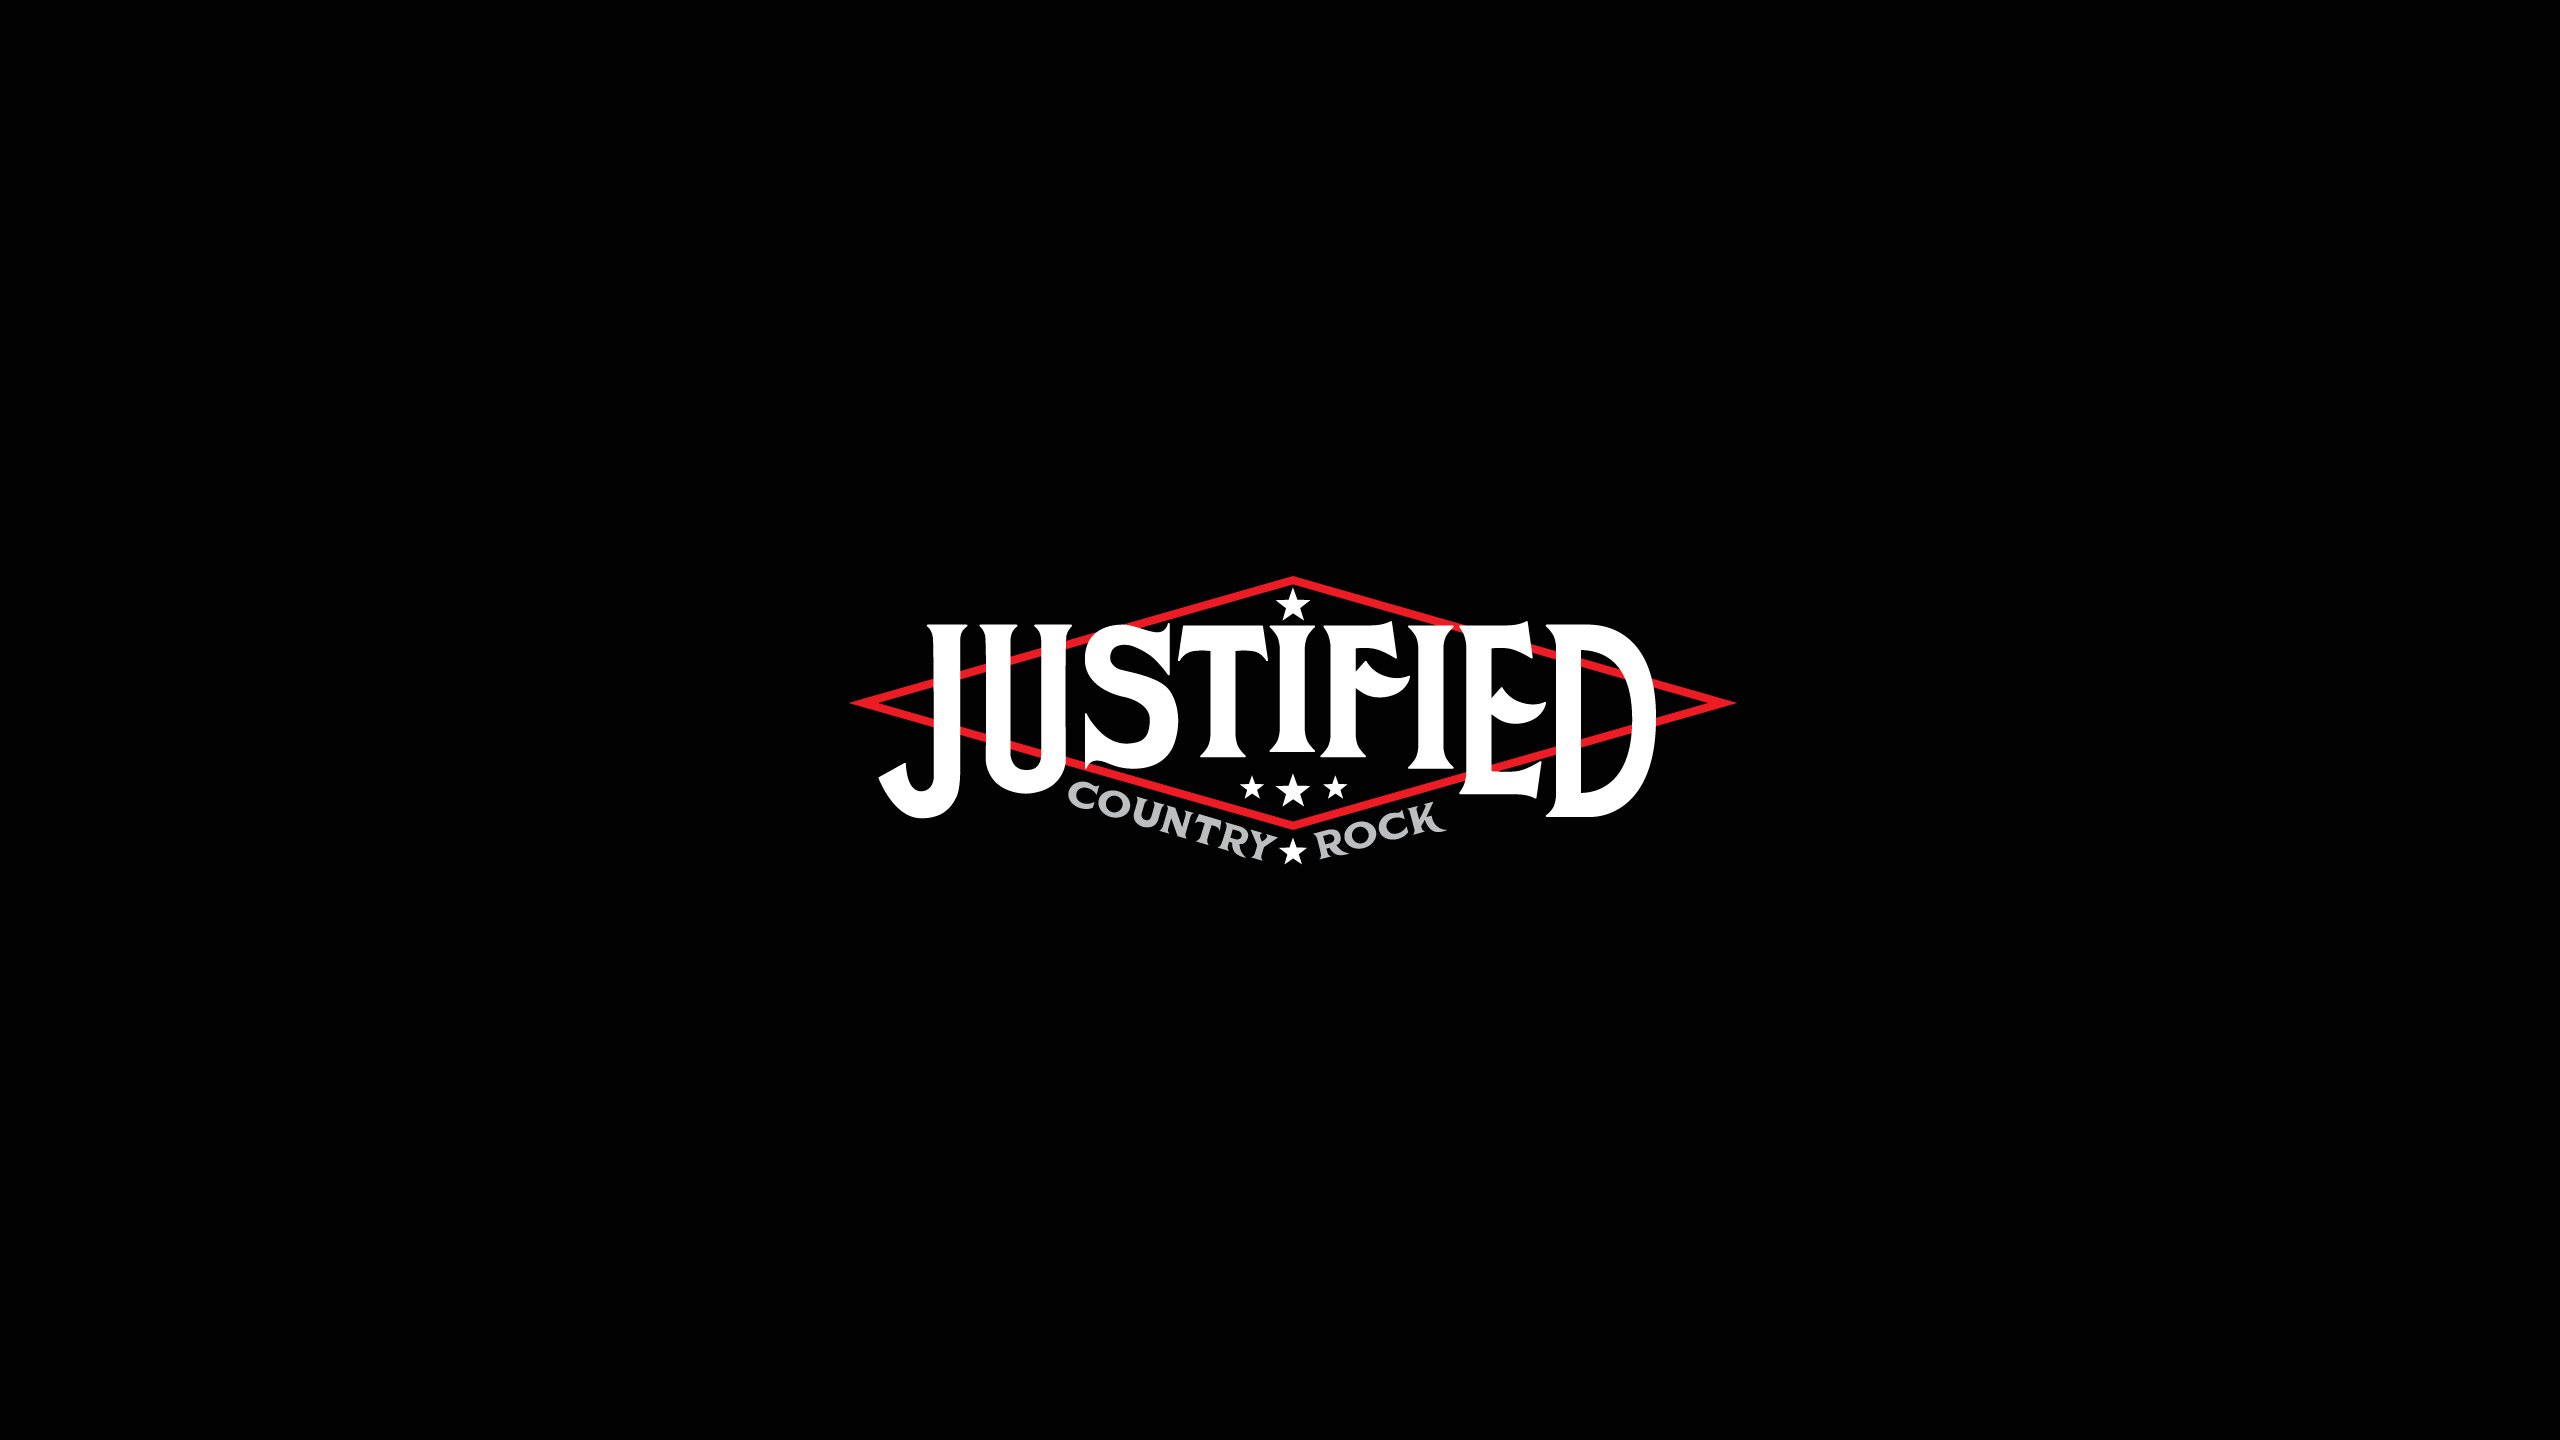 Justified Band Va. ReverbNation